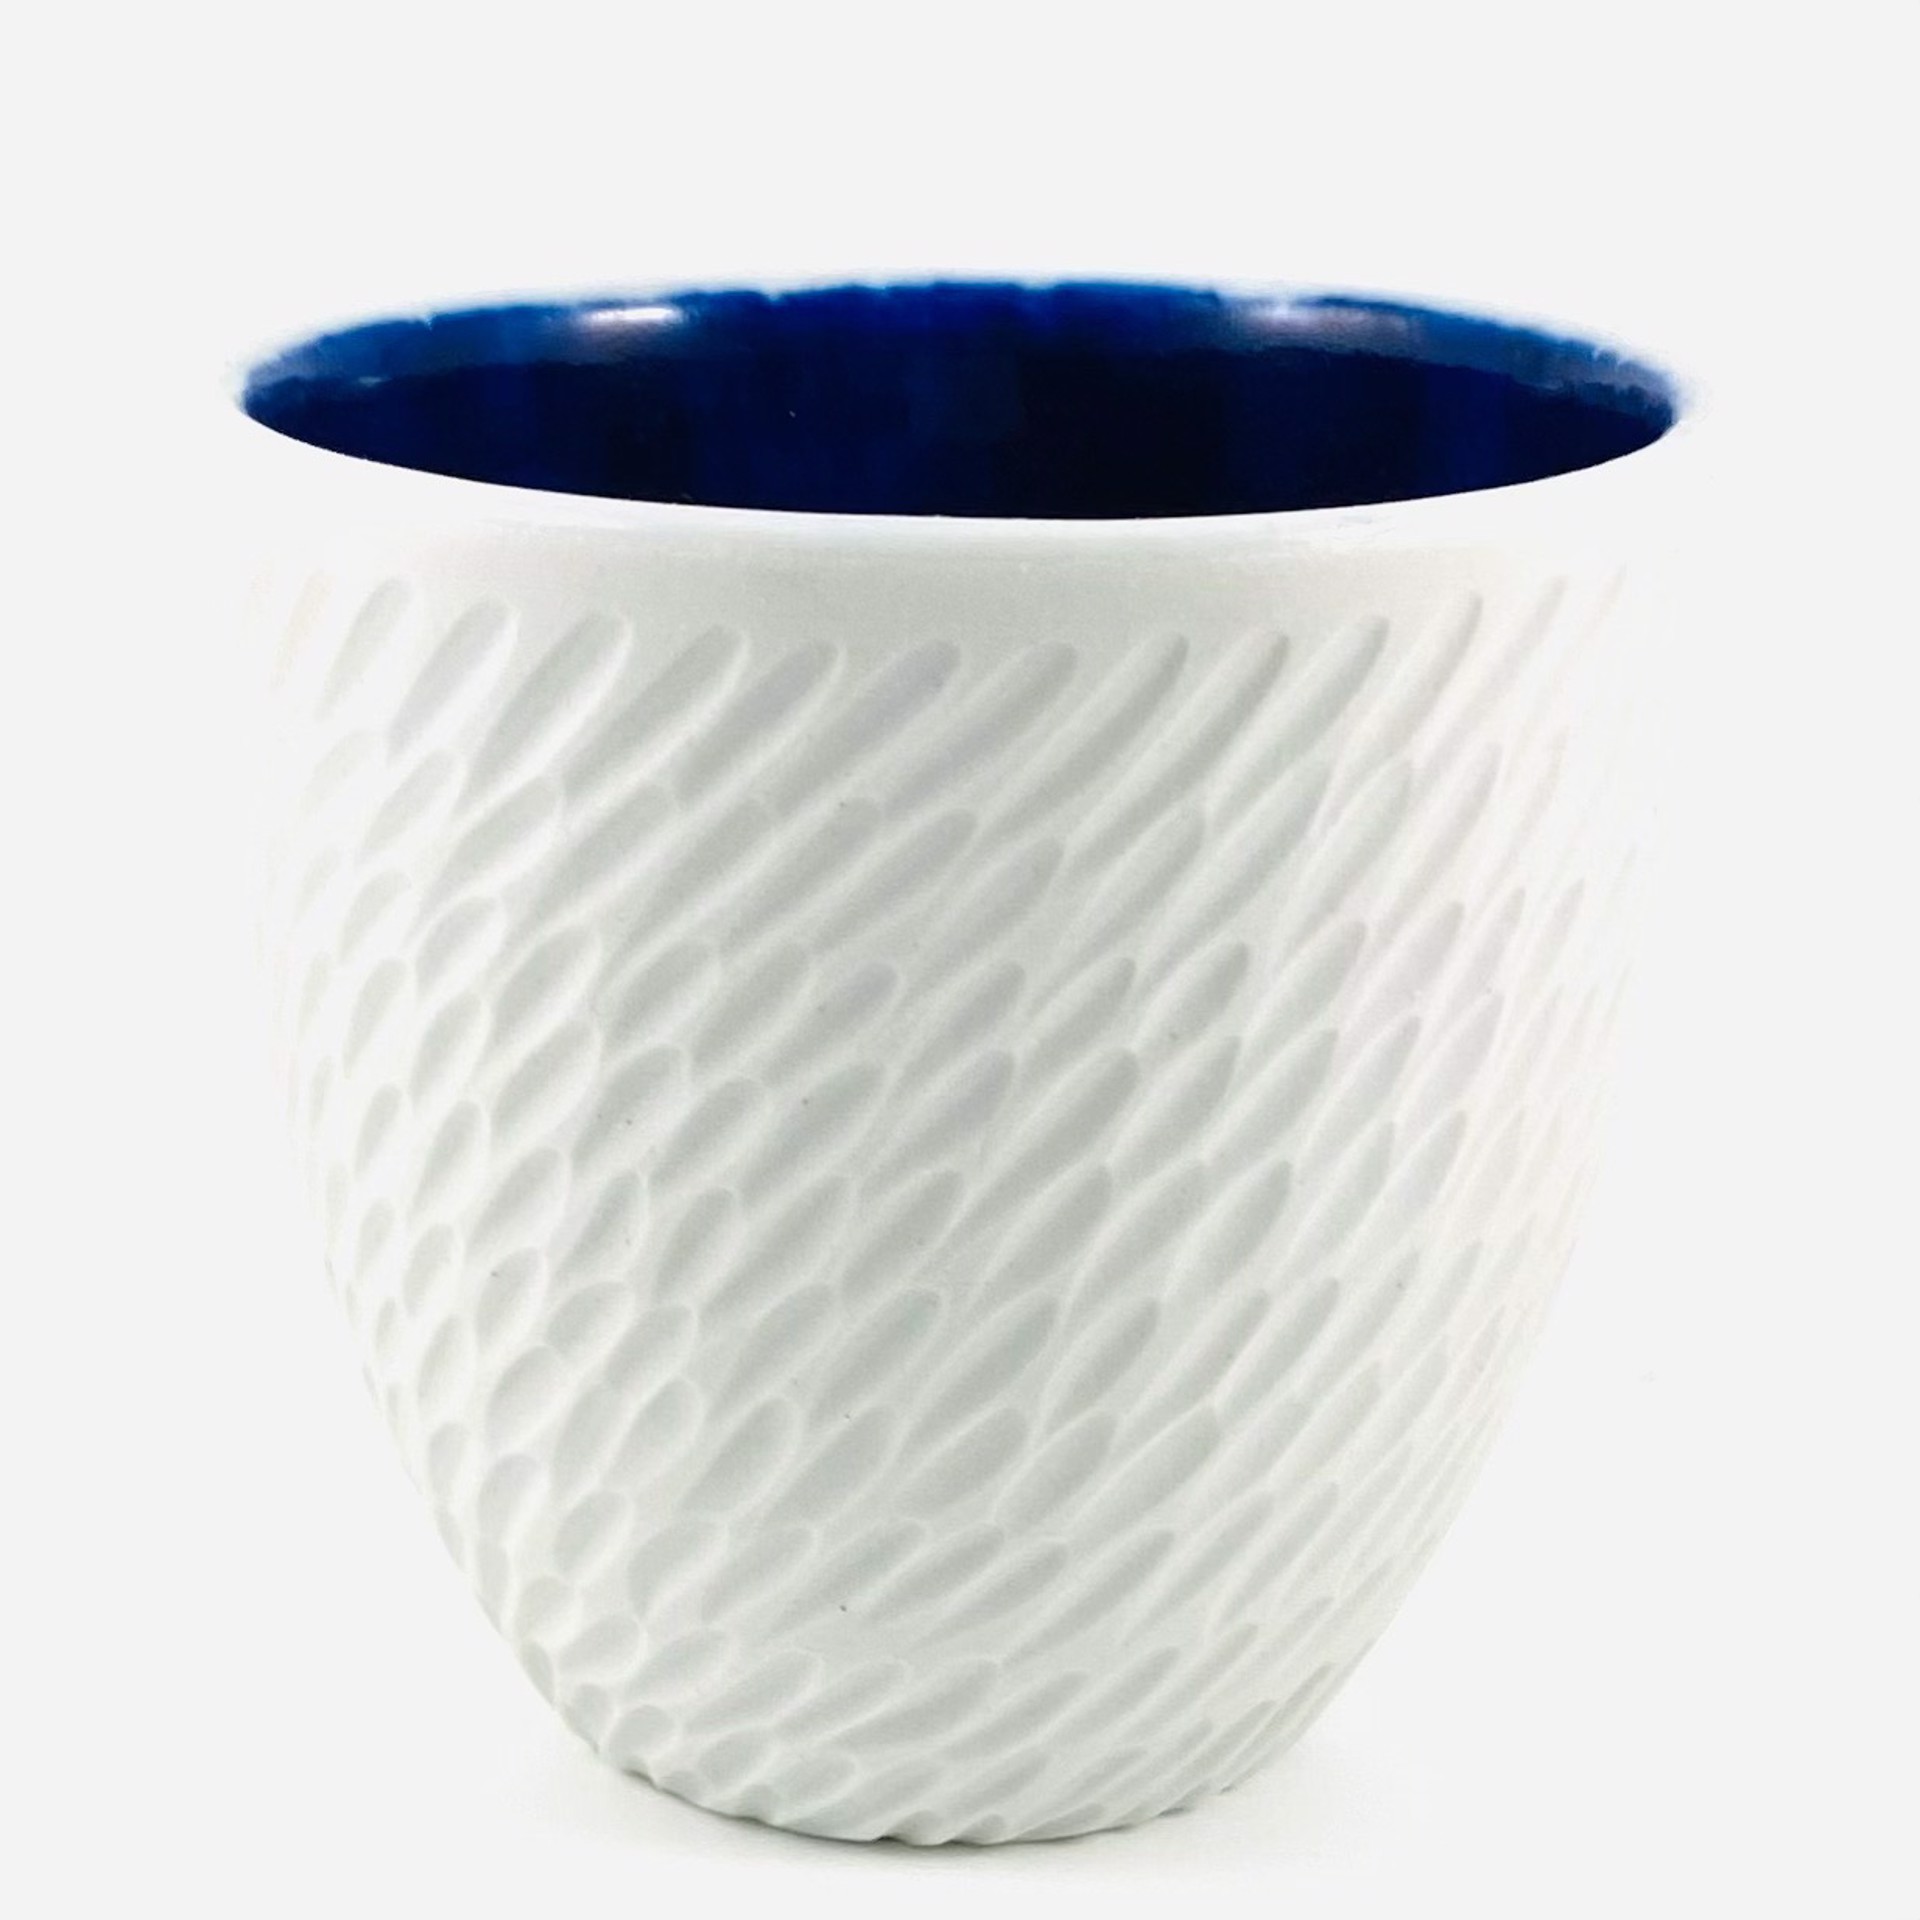 Textured Cup with Cobalt Blue Glazed Interior AJ21-6 by Ann John